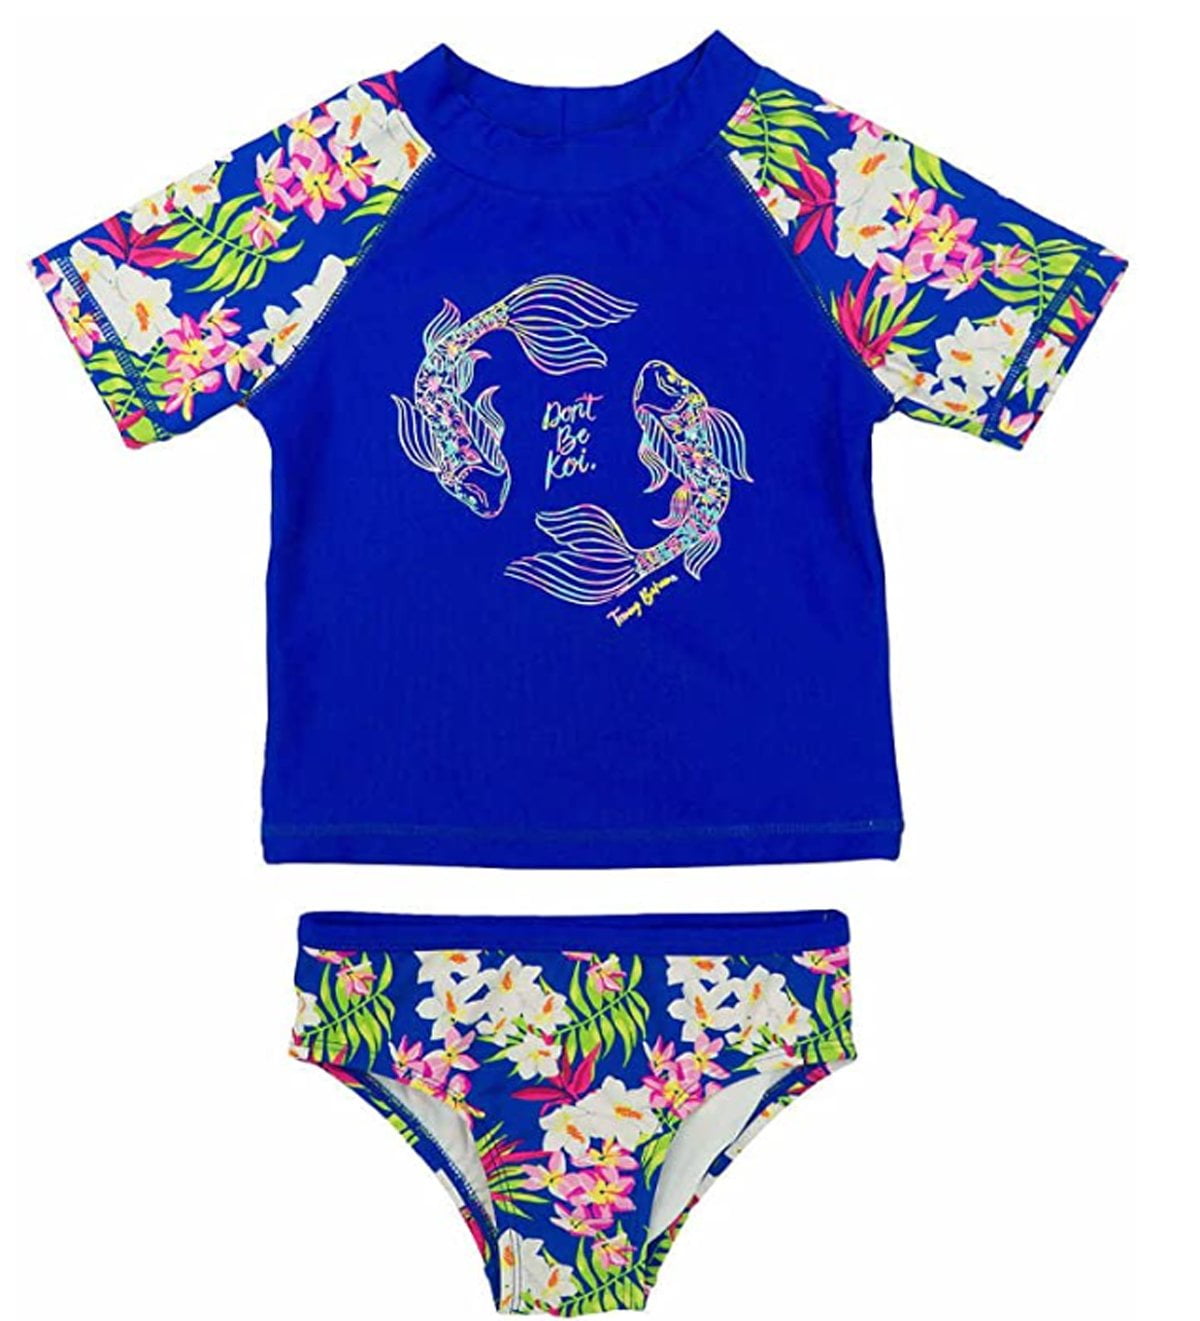 Tommy Bahama Girls' 2-Piece Bikini Swimsuit Bathing Suit Size 4T *NEW* 